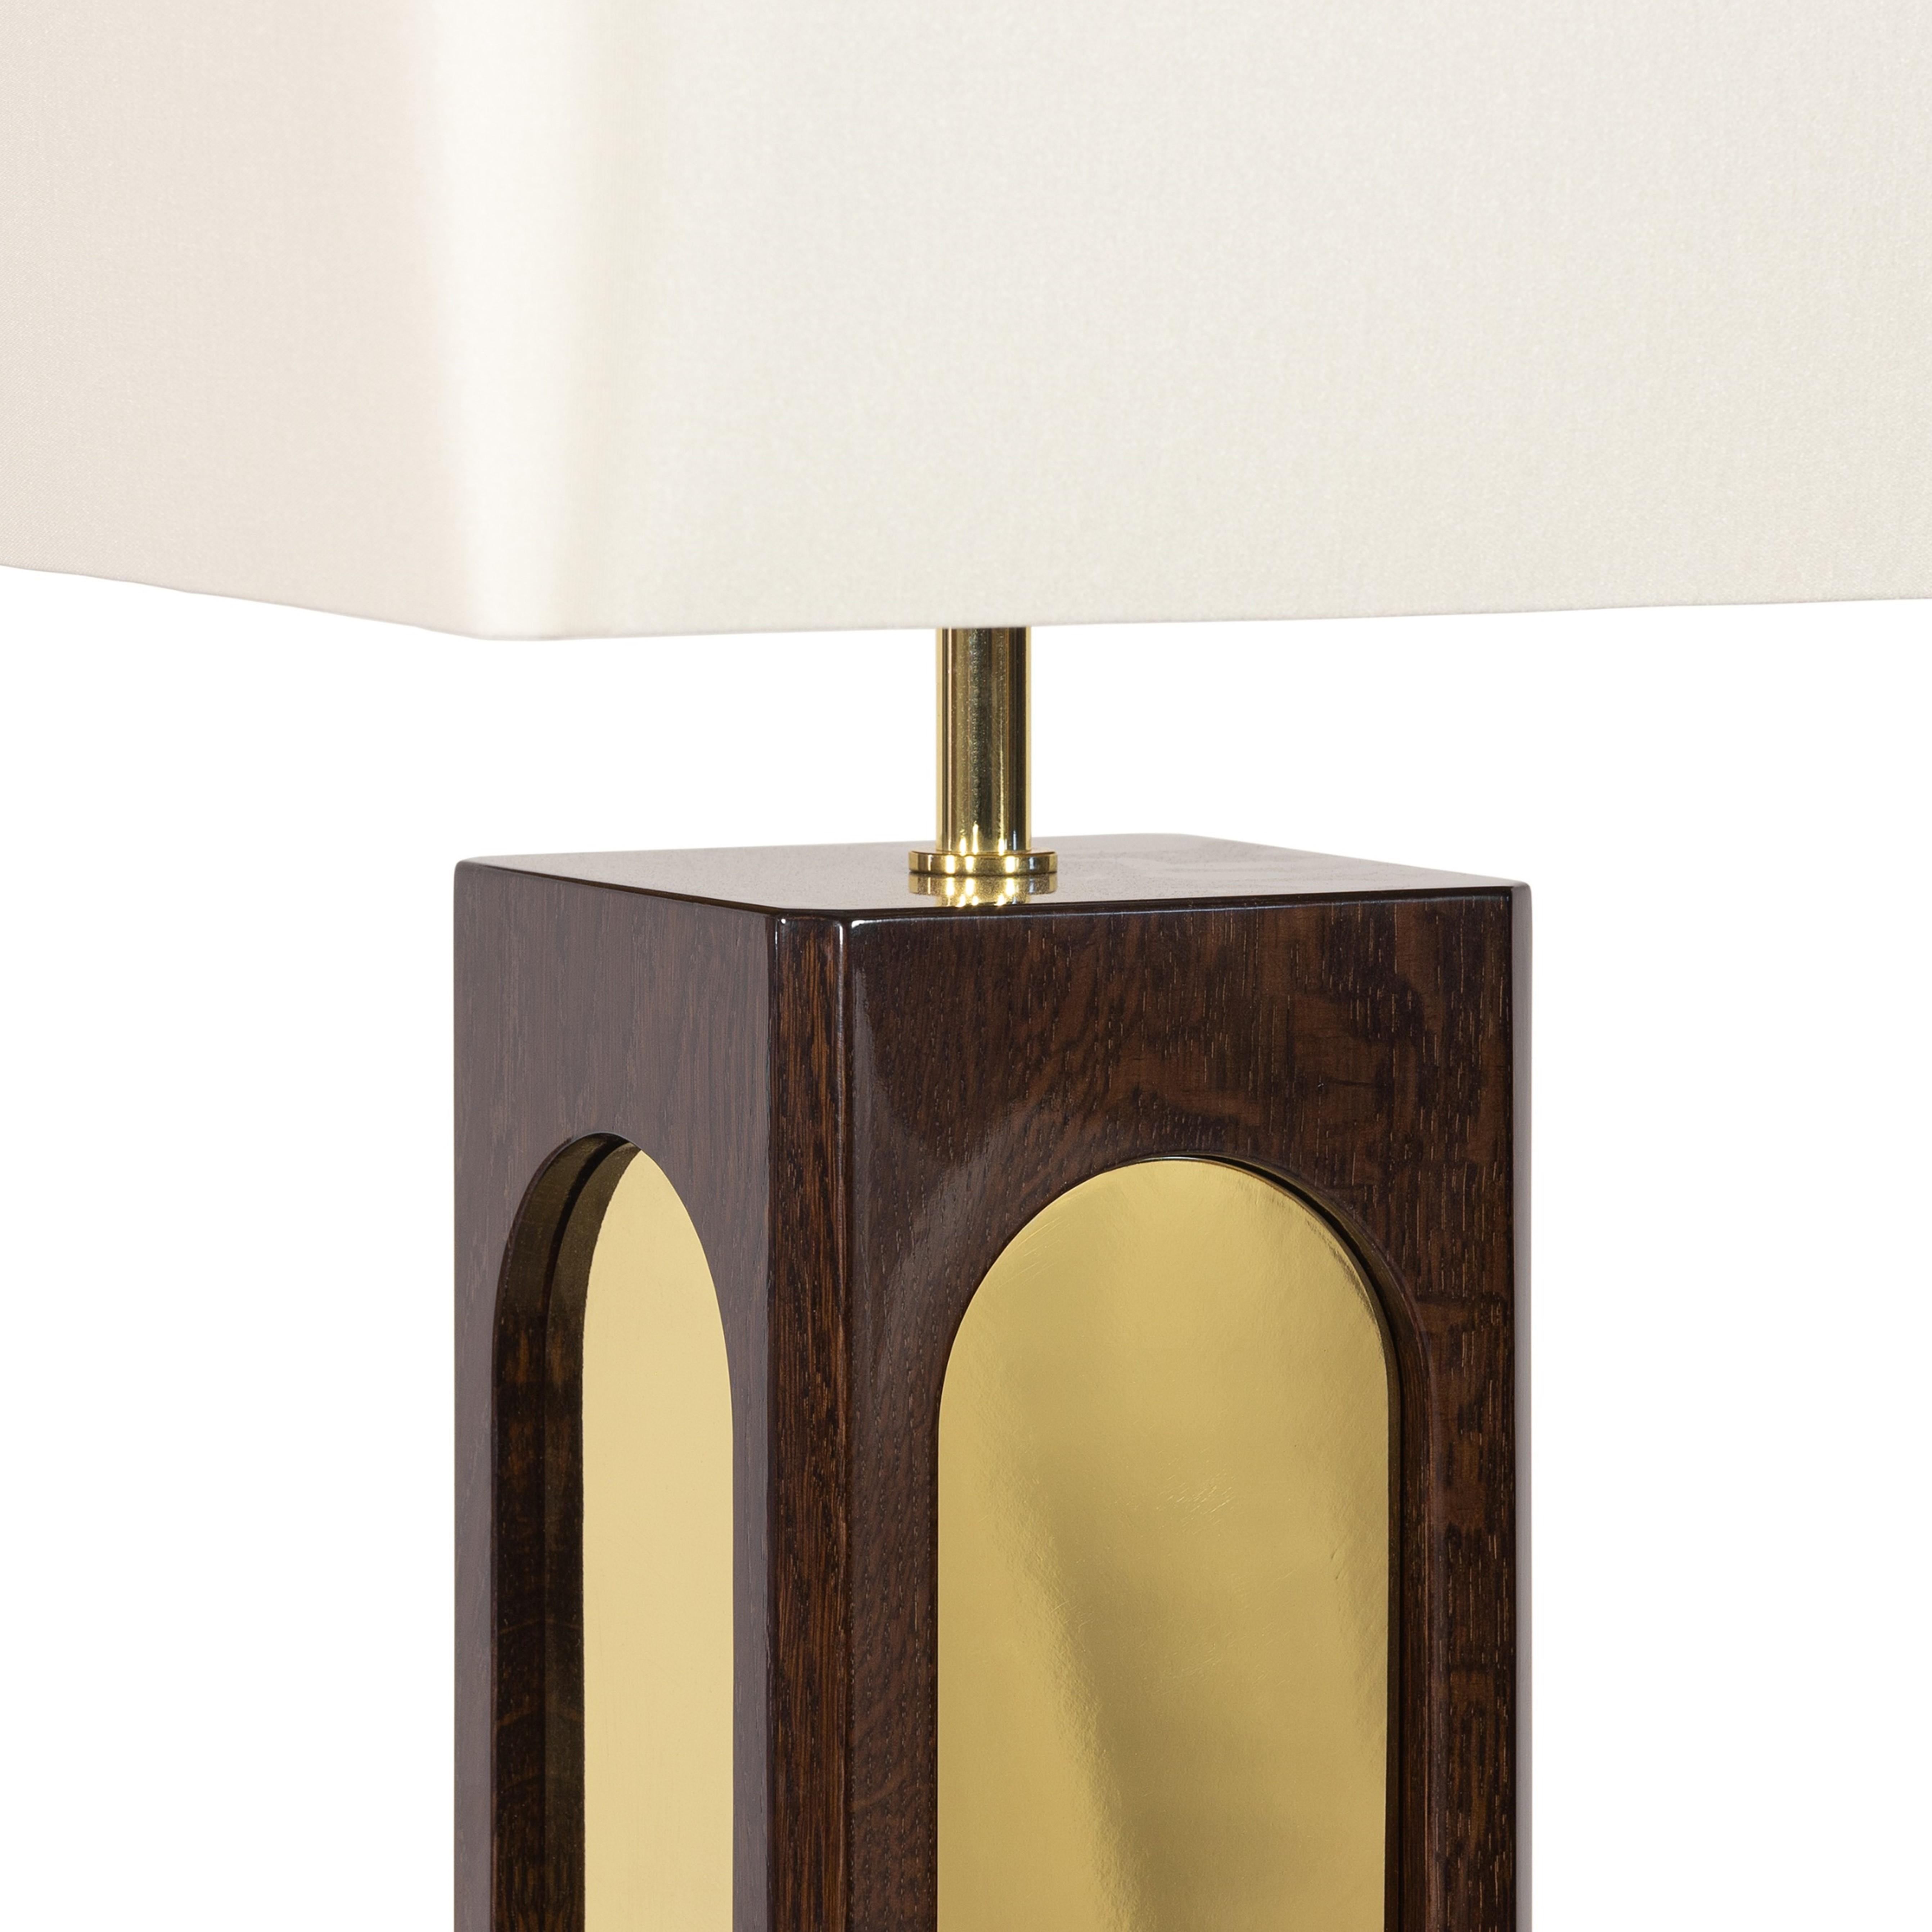 Modern Metropolitan Table Lamp, Wood and Brass, InsidherLand by Joana Santos Barbosa For Sale